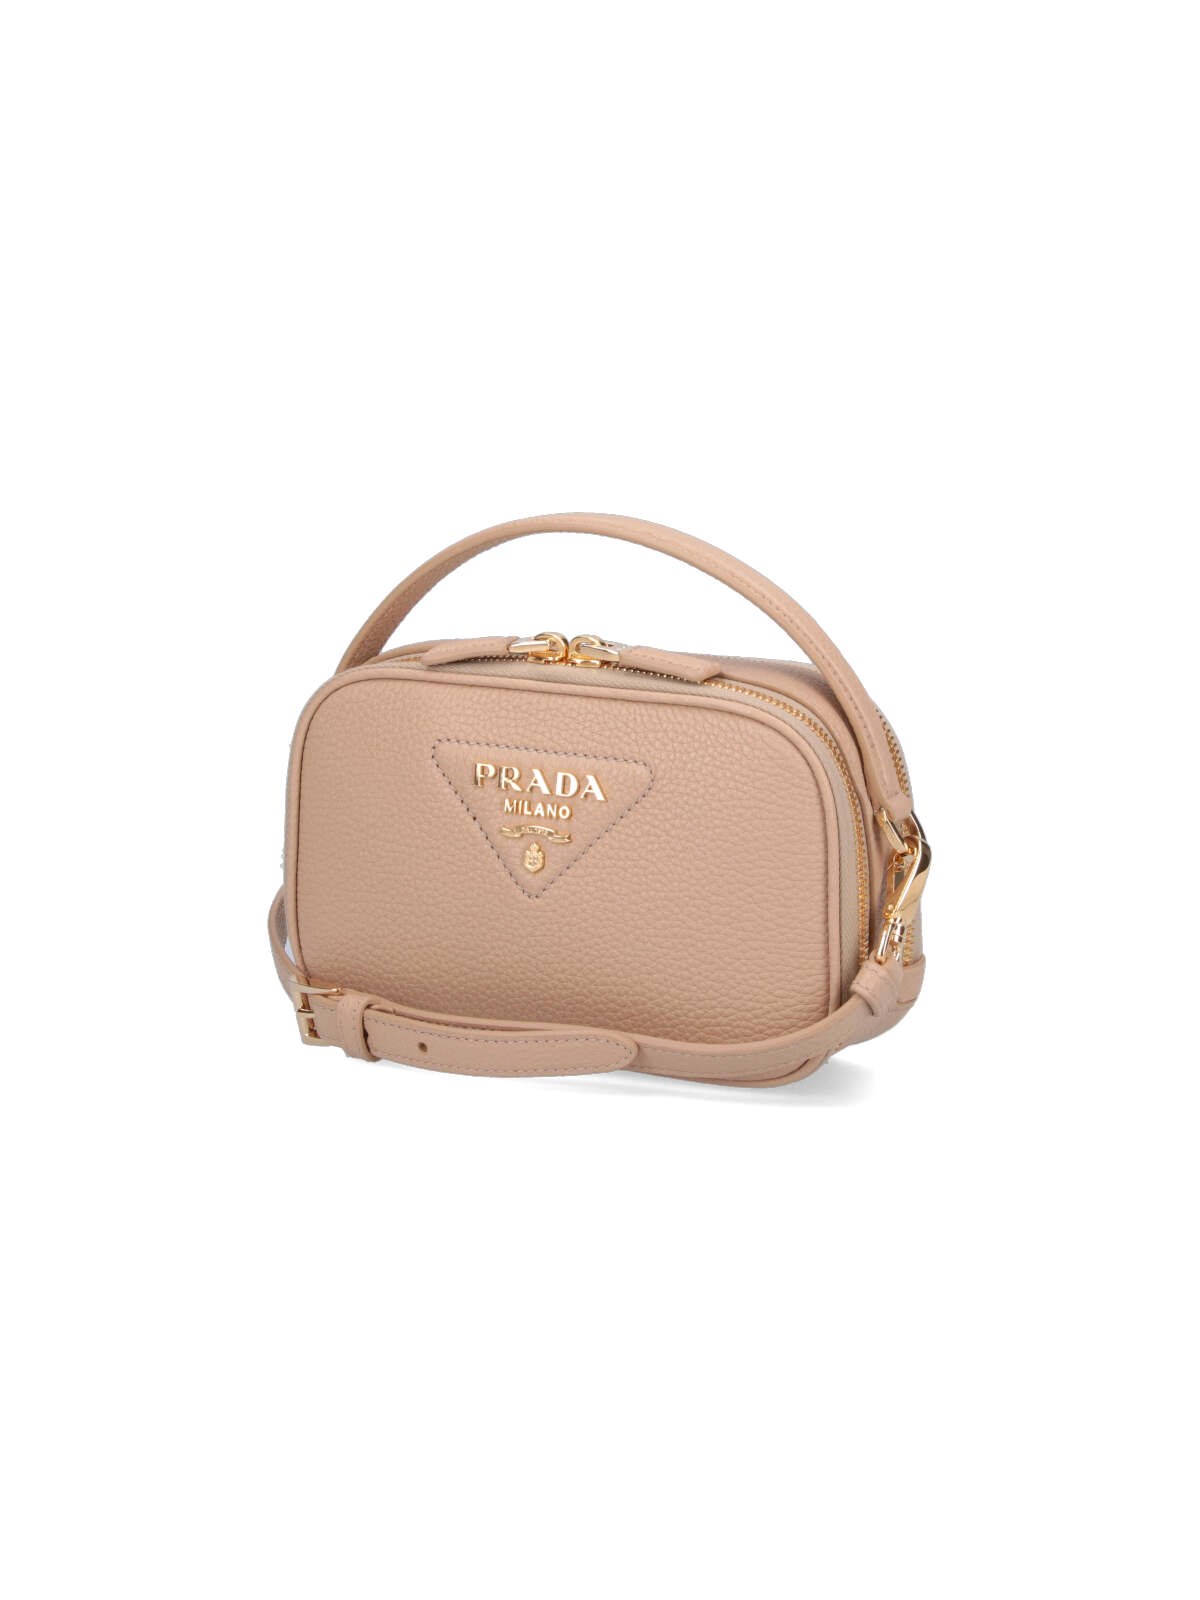 Prada Logo handbag available on SUGAR - 133951